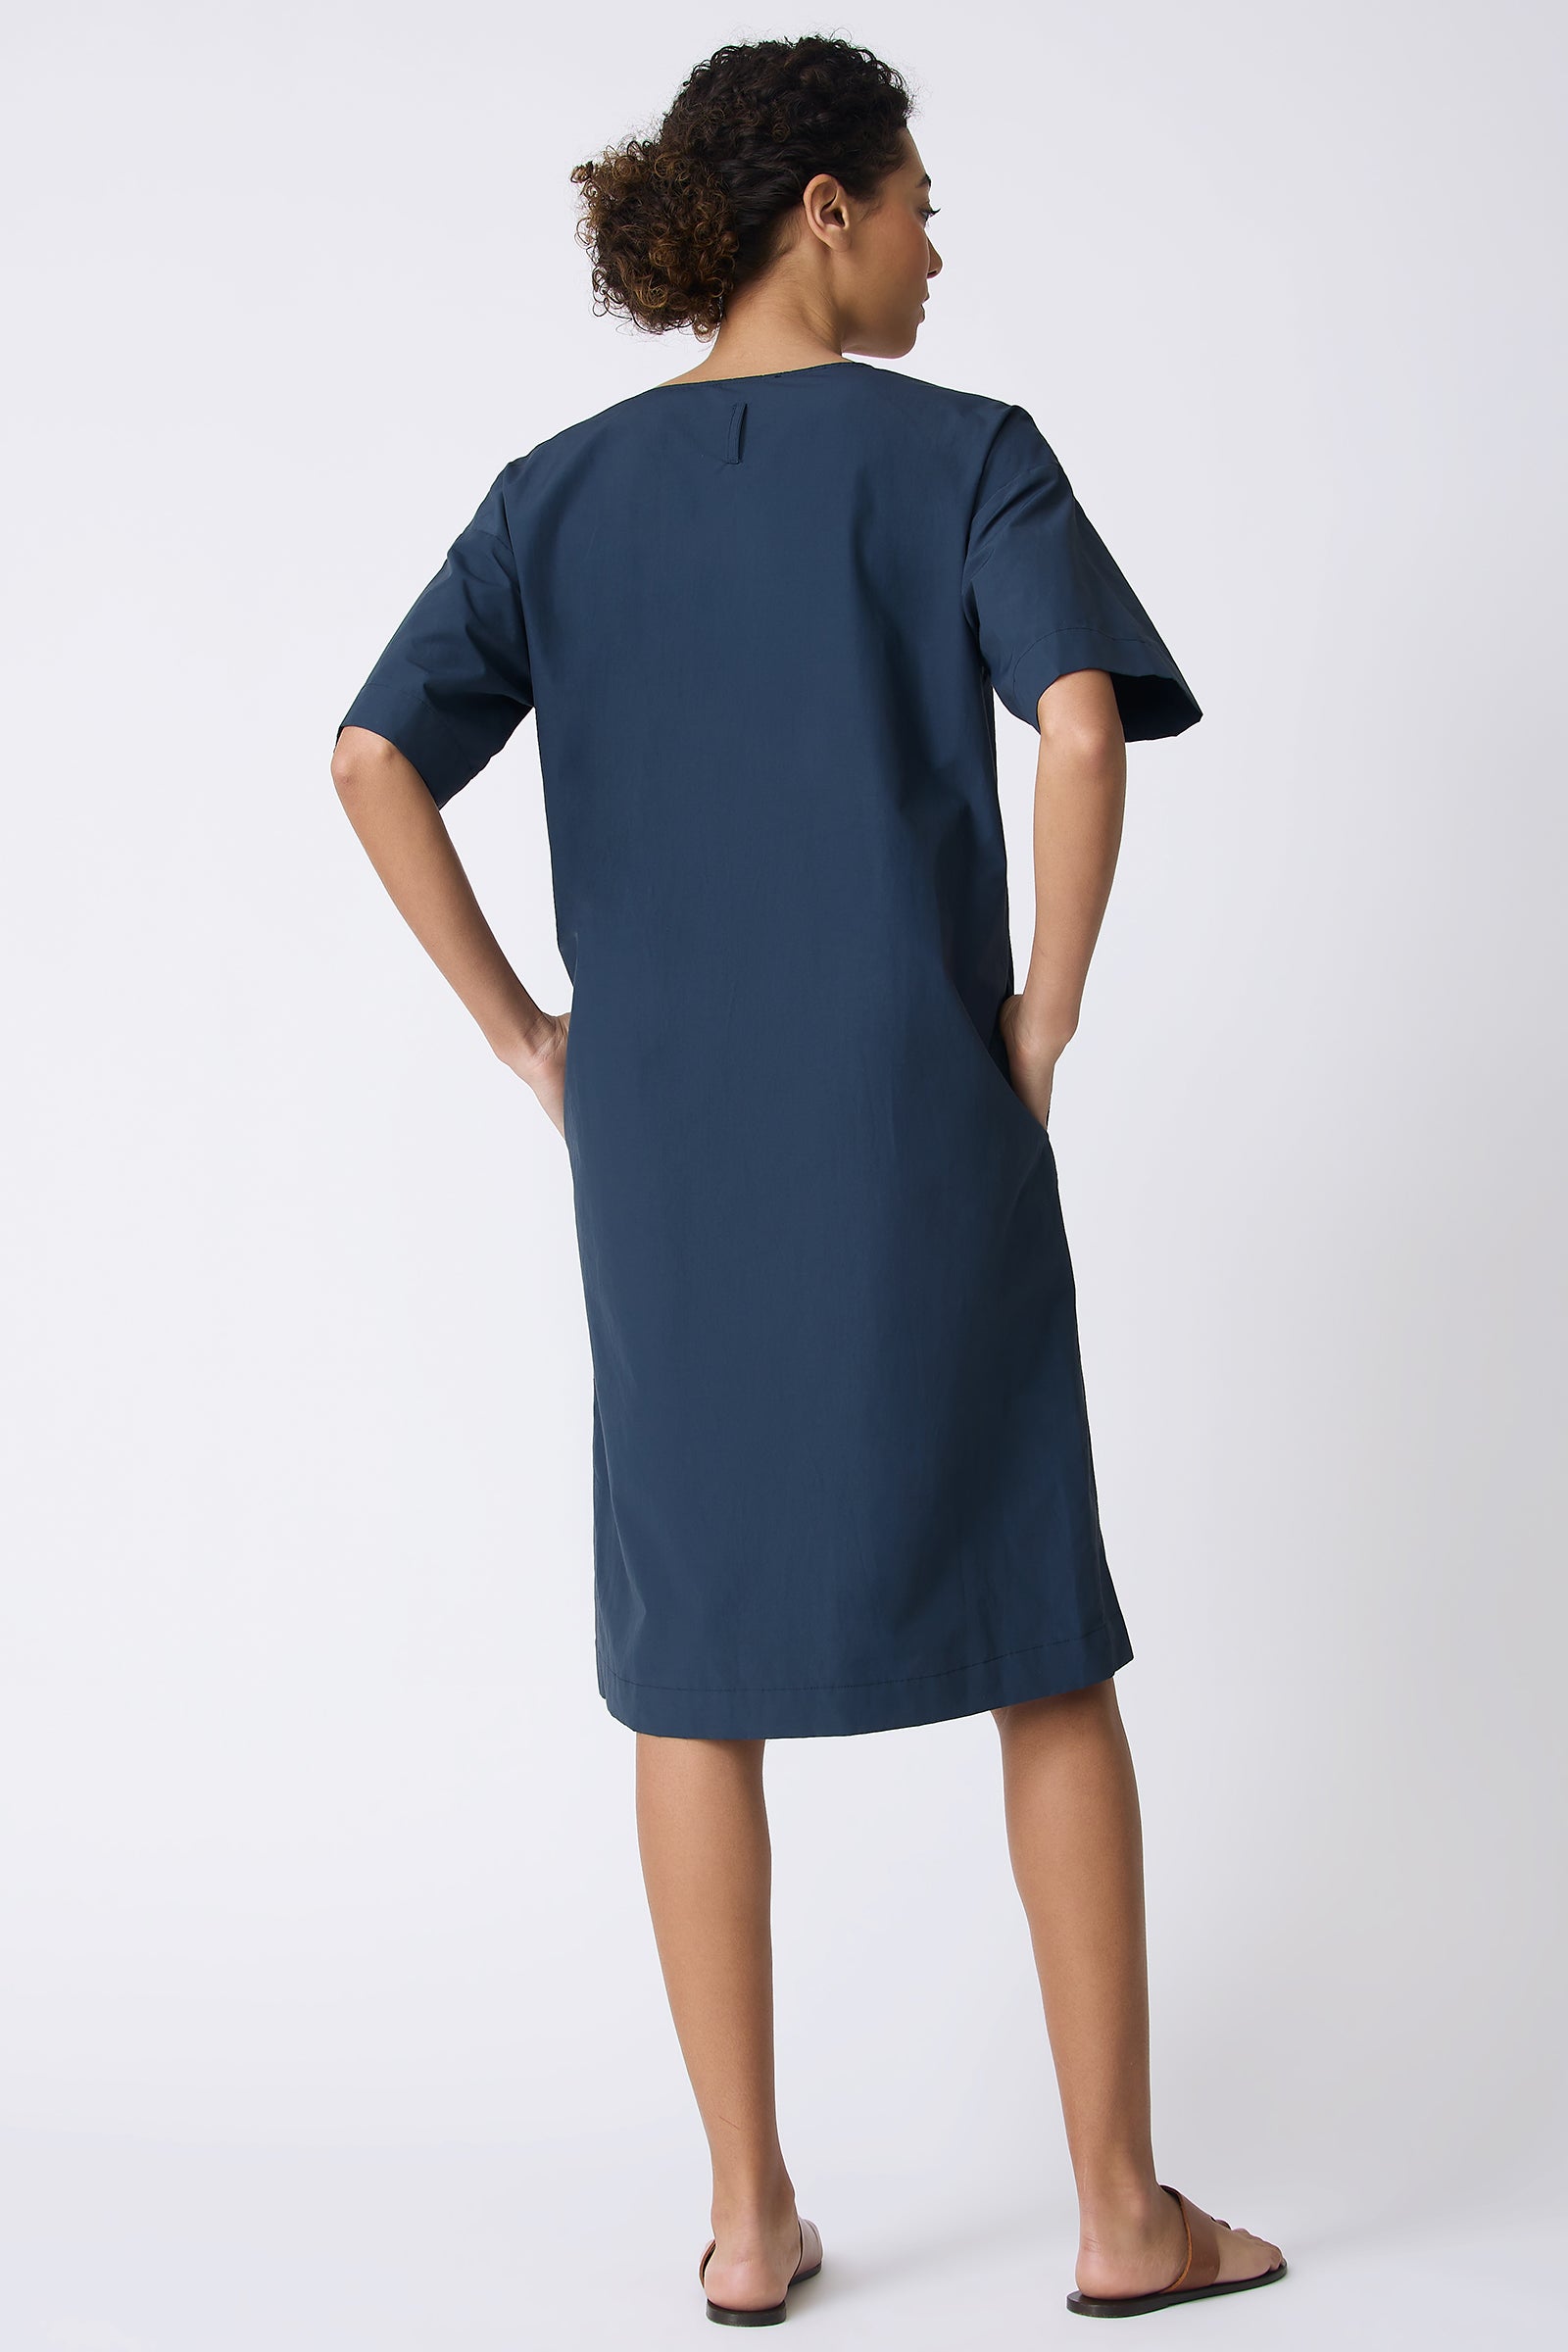 Kal Rieman Cara Fold Front Dress in Summer Navy on model full back view